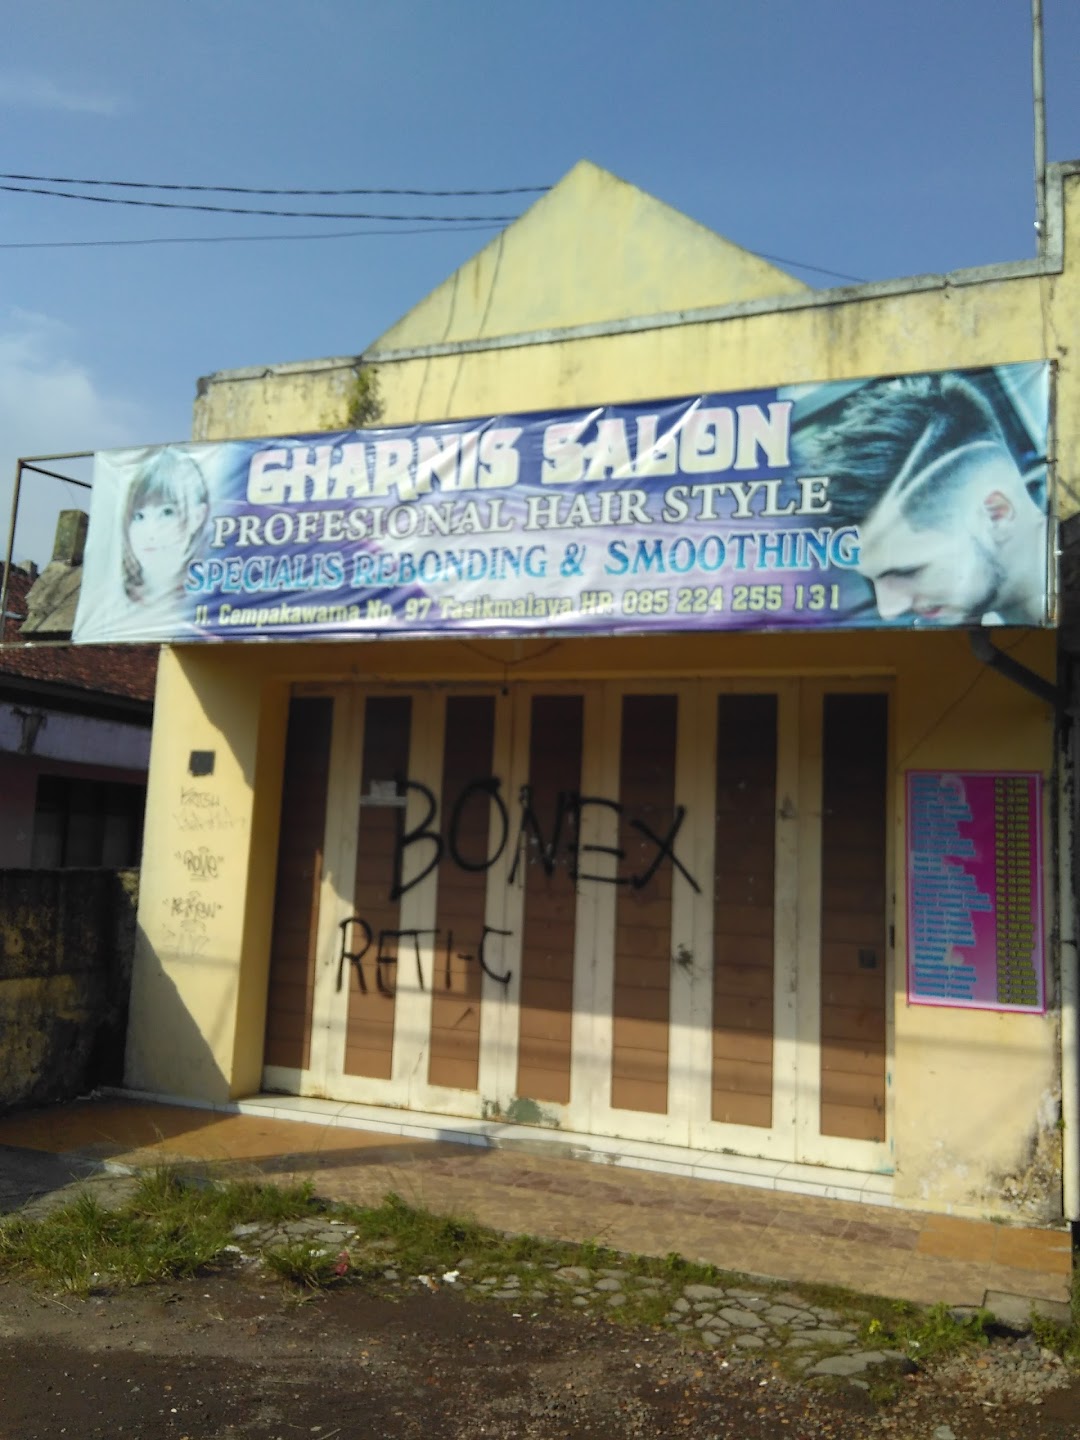 Gharnis Salon